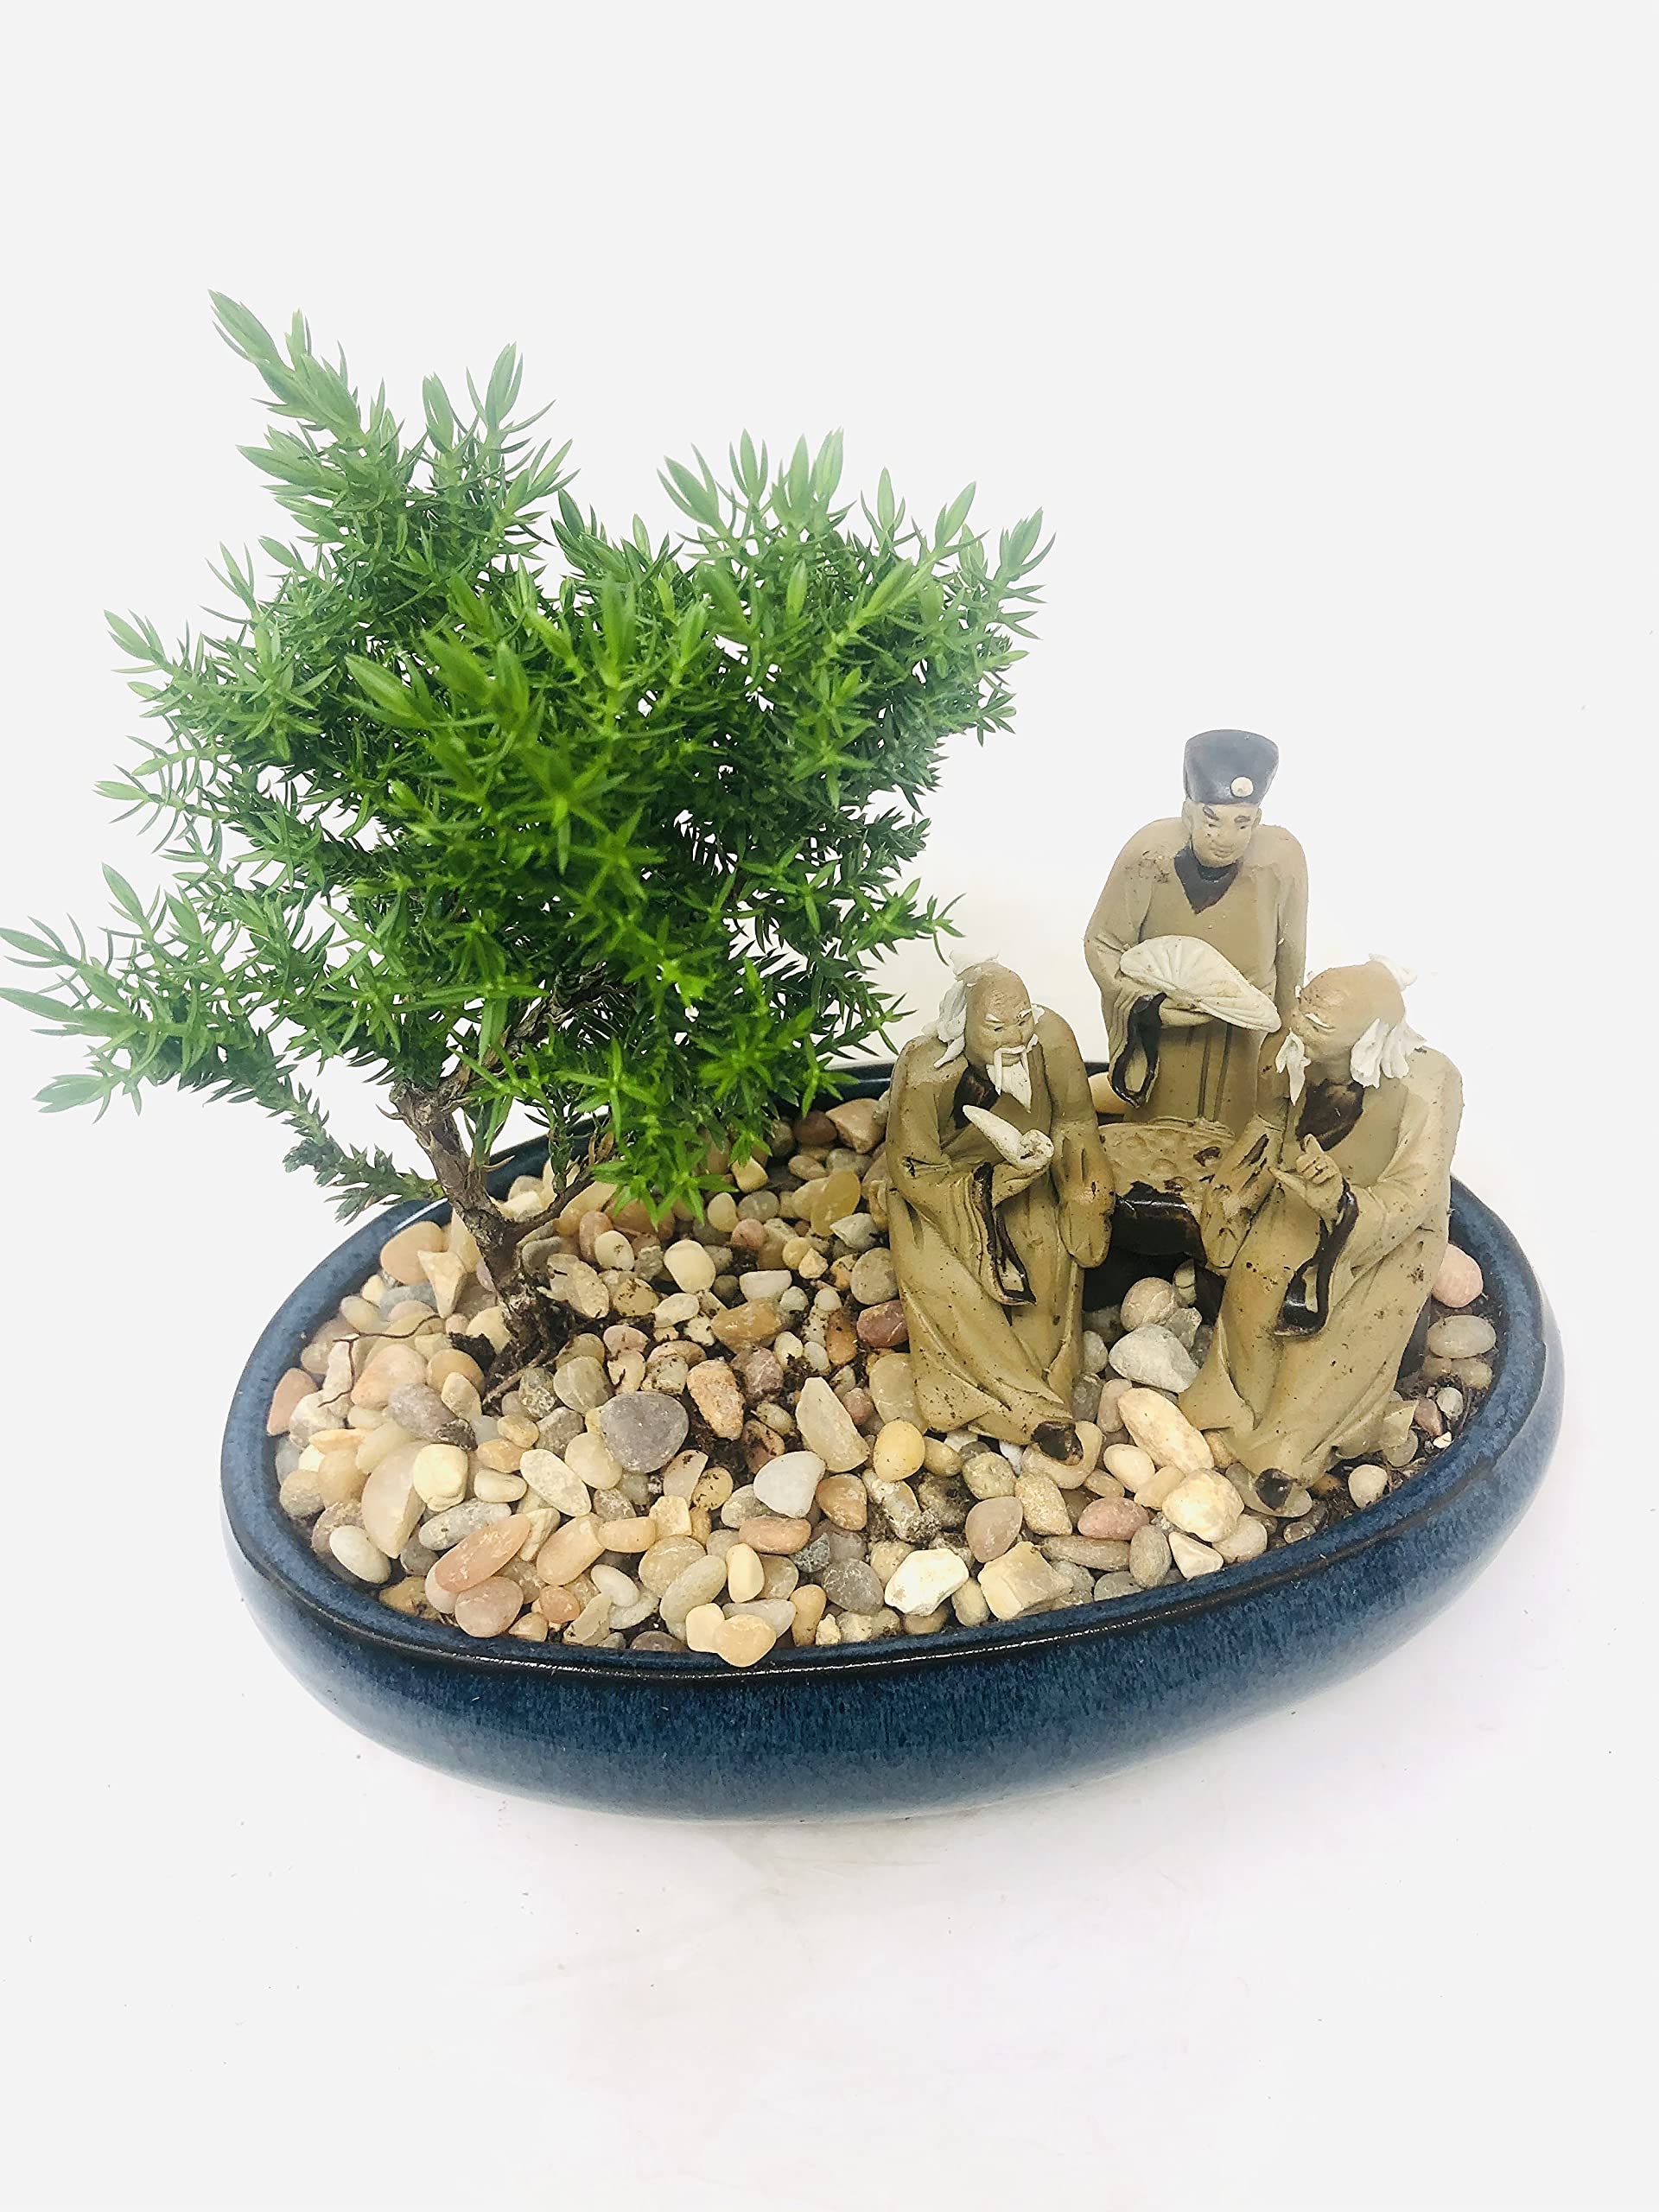 Juniper Bonsai Tree with Three Master's Reunion Ceramic Pot